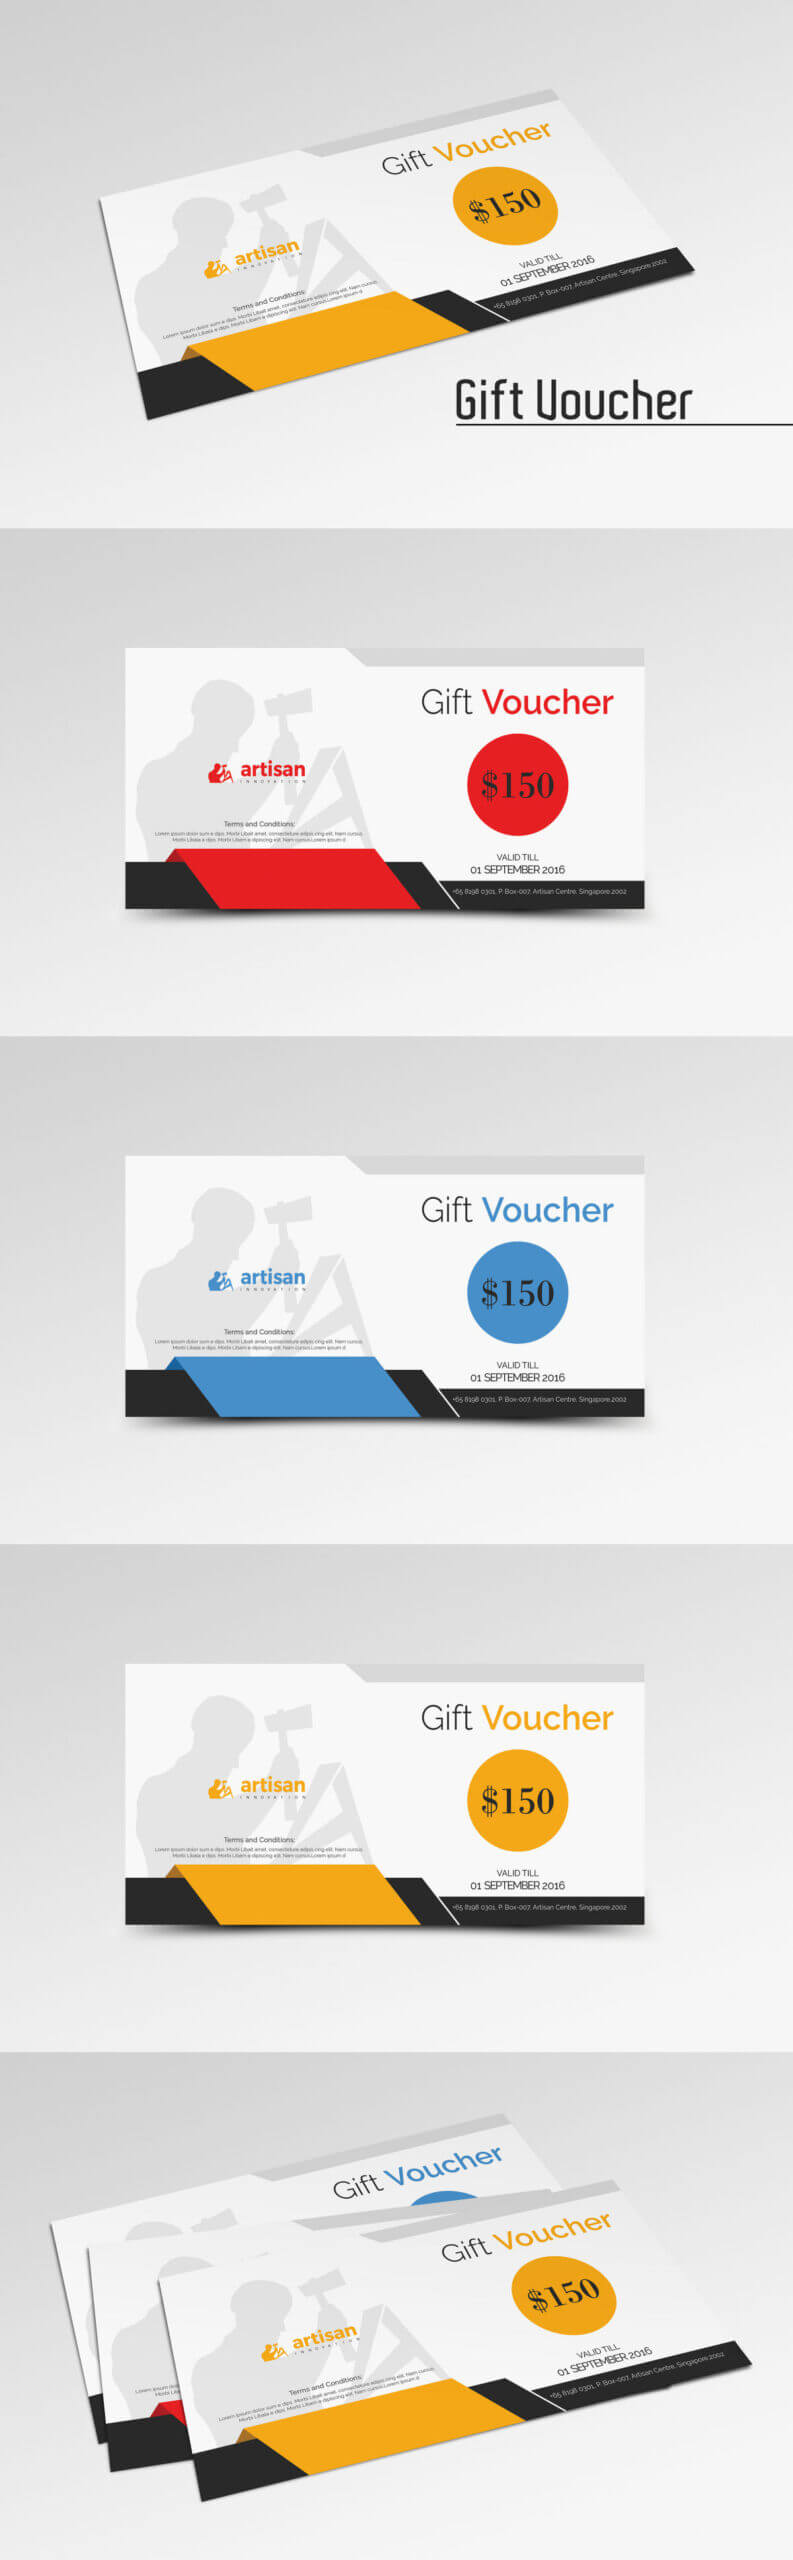 Gift Voucher Template Ai, Eps, Psd | Gift Card Template Within Gift Card Template Illustrator